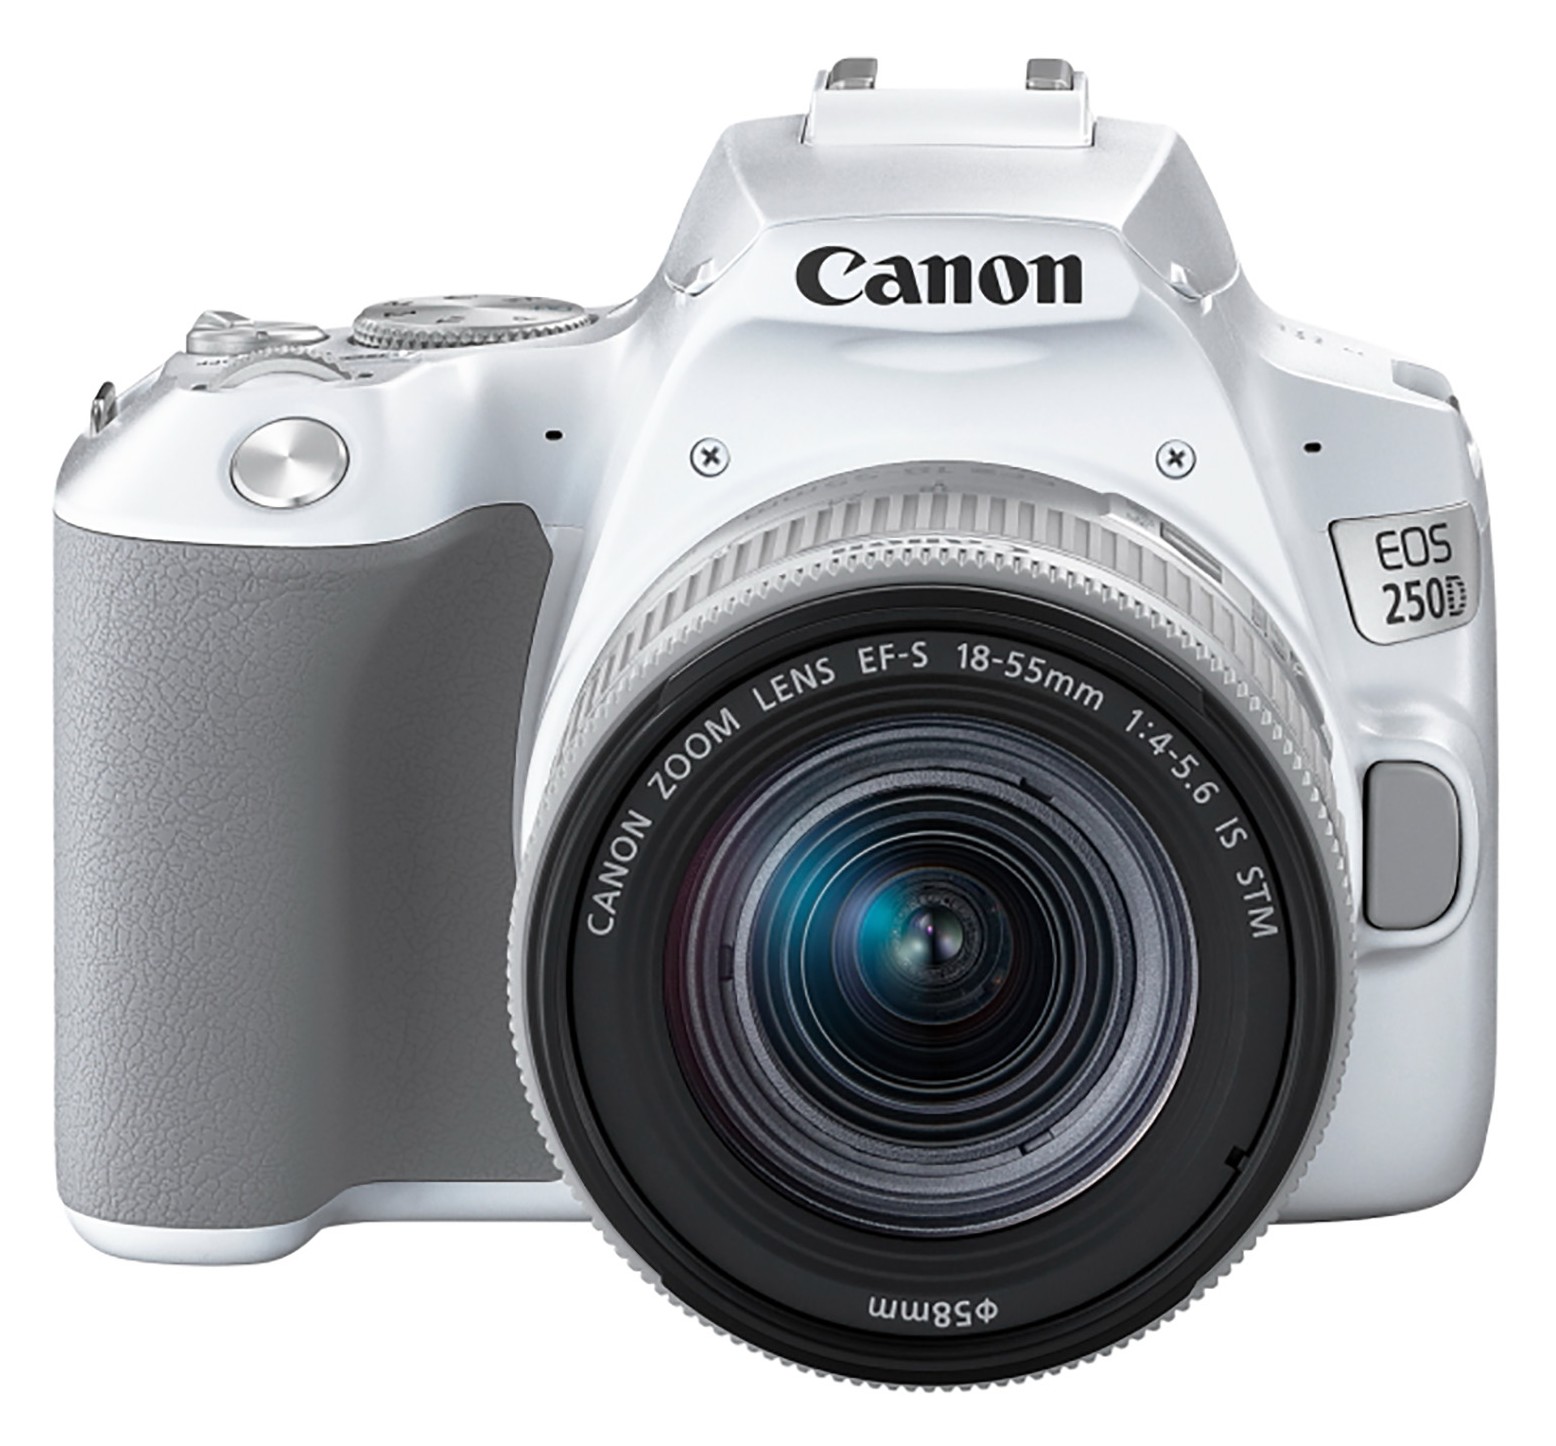 Lokken Mogelijk als Canon EOS 250D, white + silver 18-55mm IS U lens - Castle Cameras